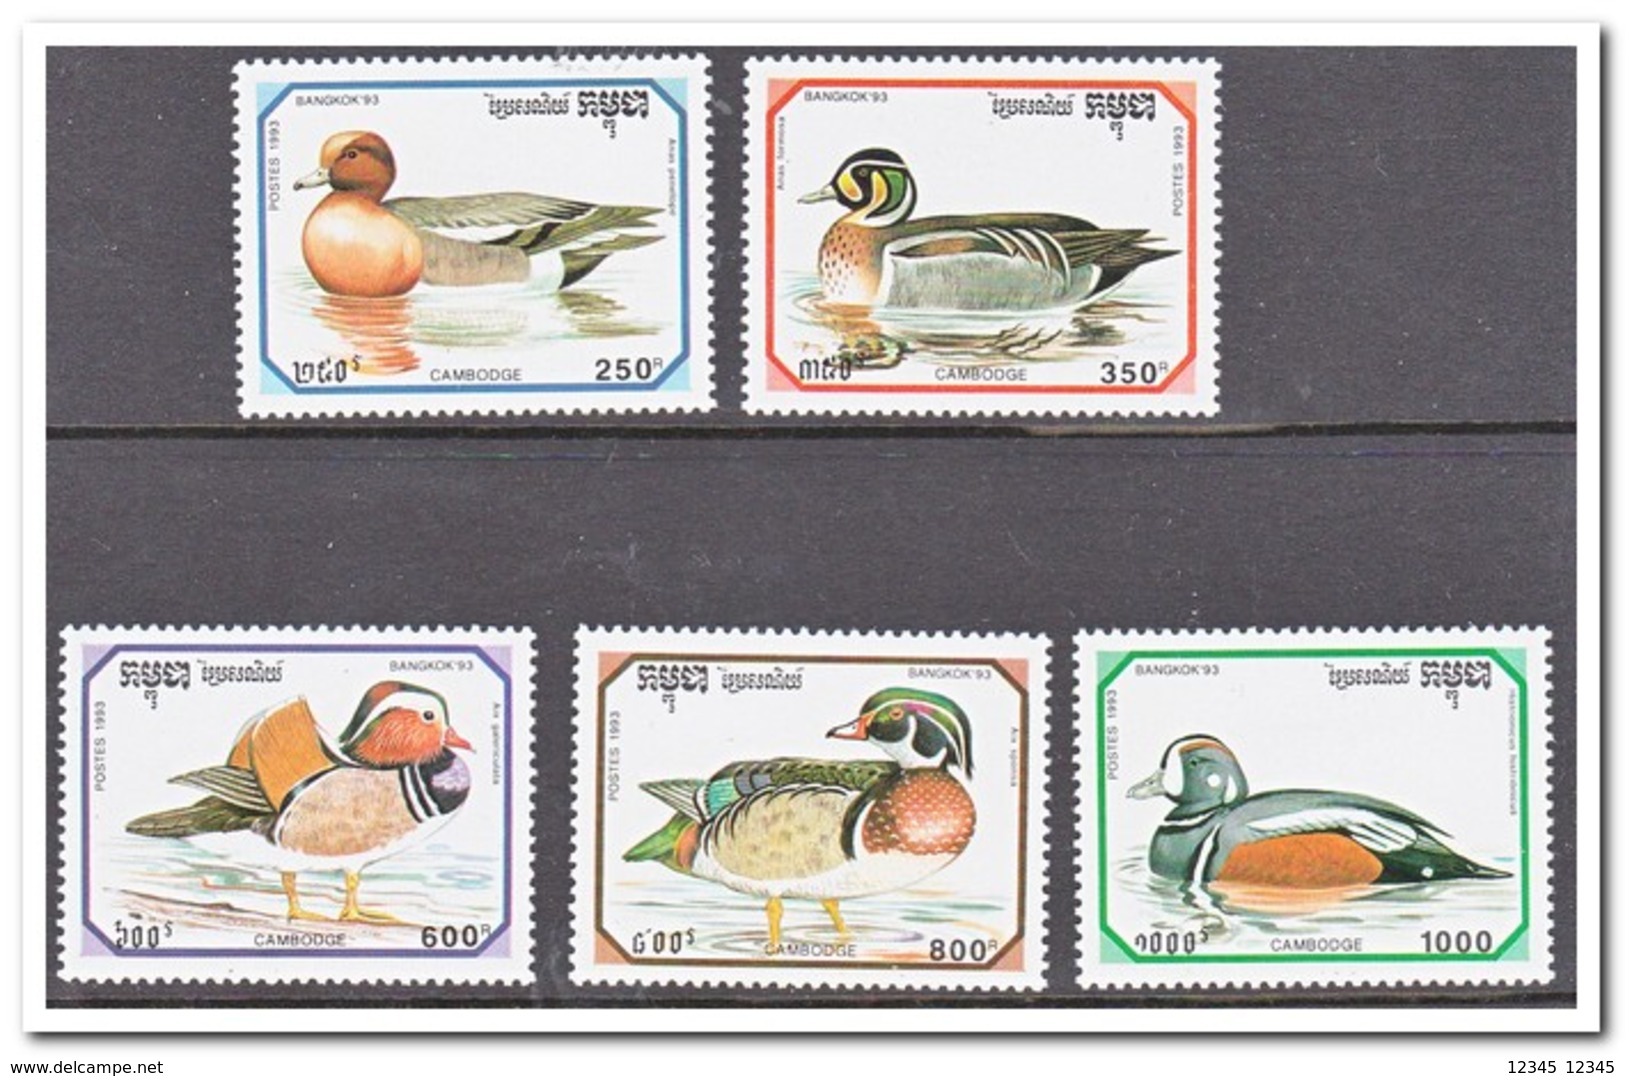 Cambodja 1993, Postfris MNH, Birds, Ducks - Cambodja